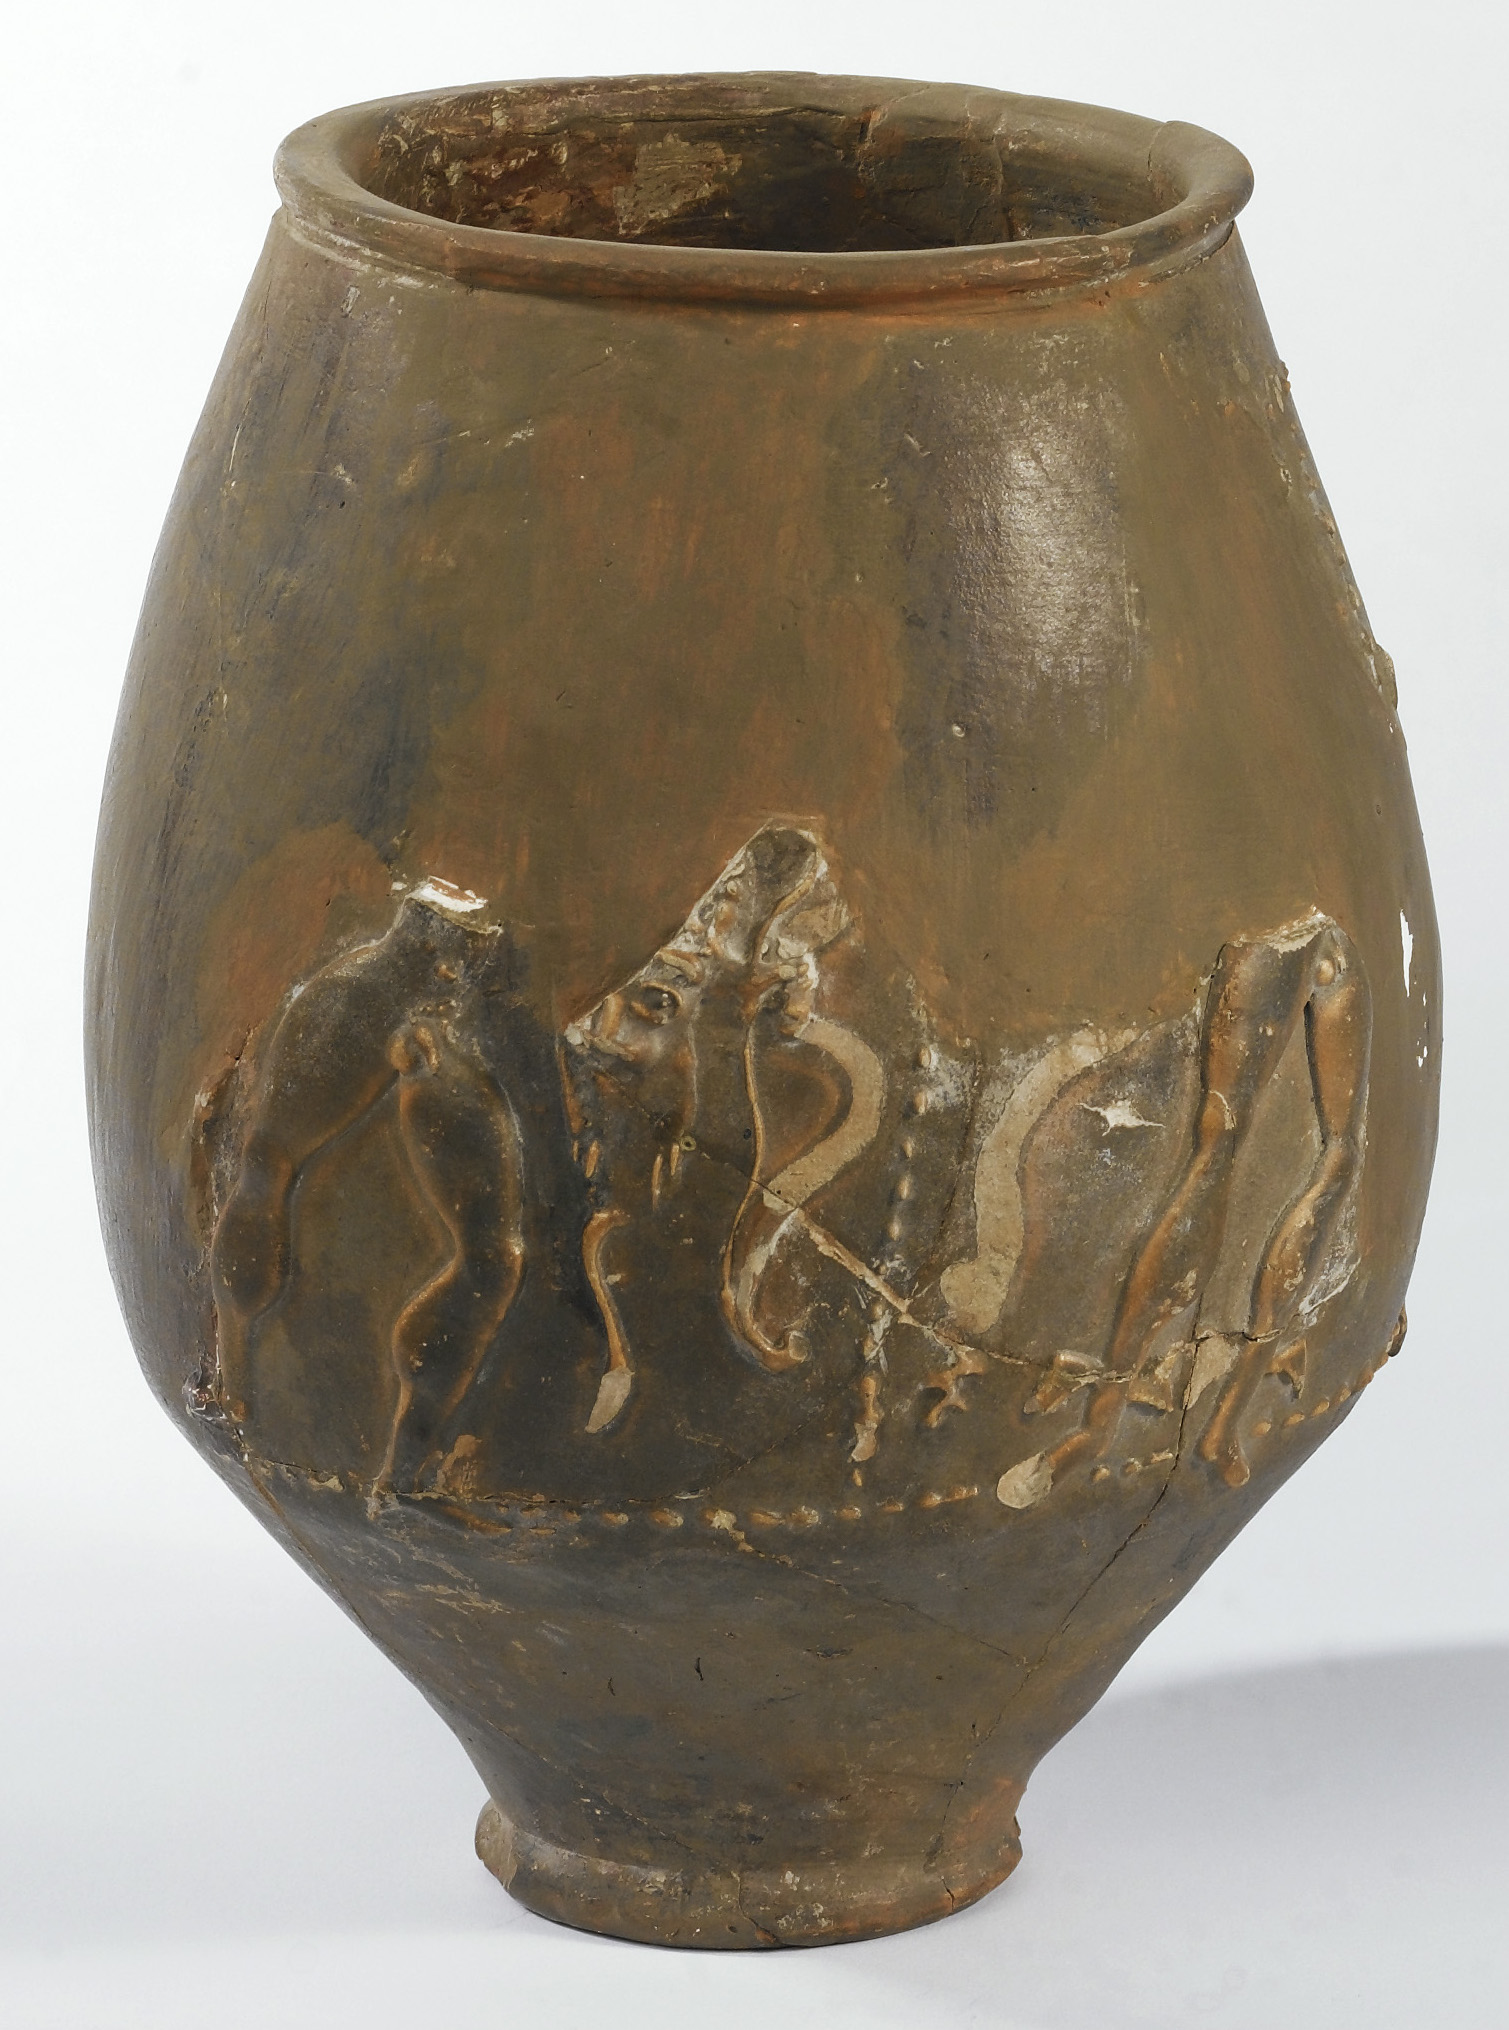 Mithraic castor-vase of St Albans